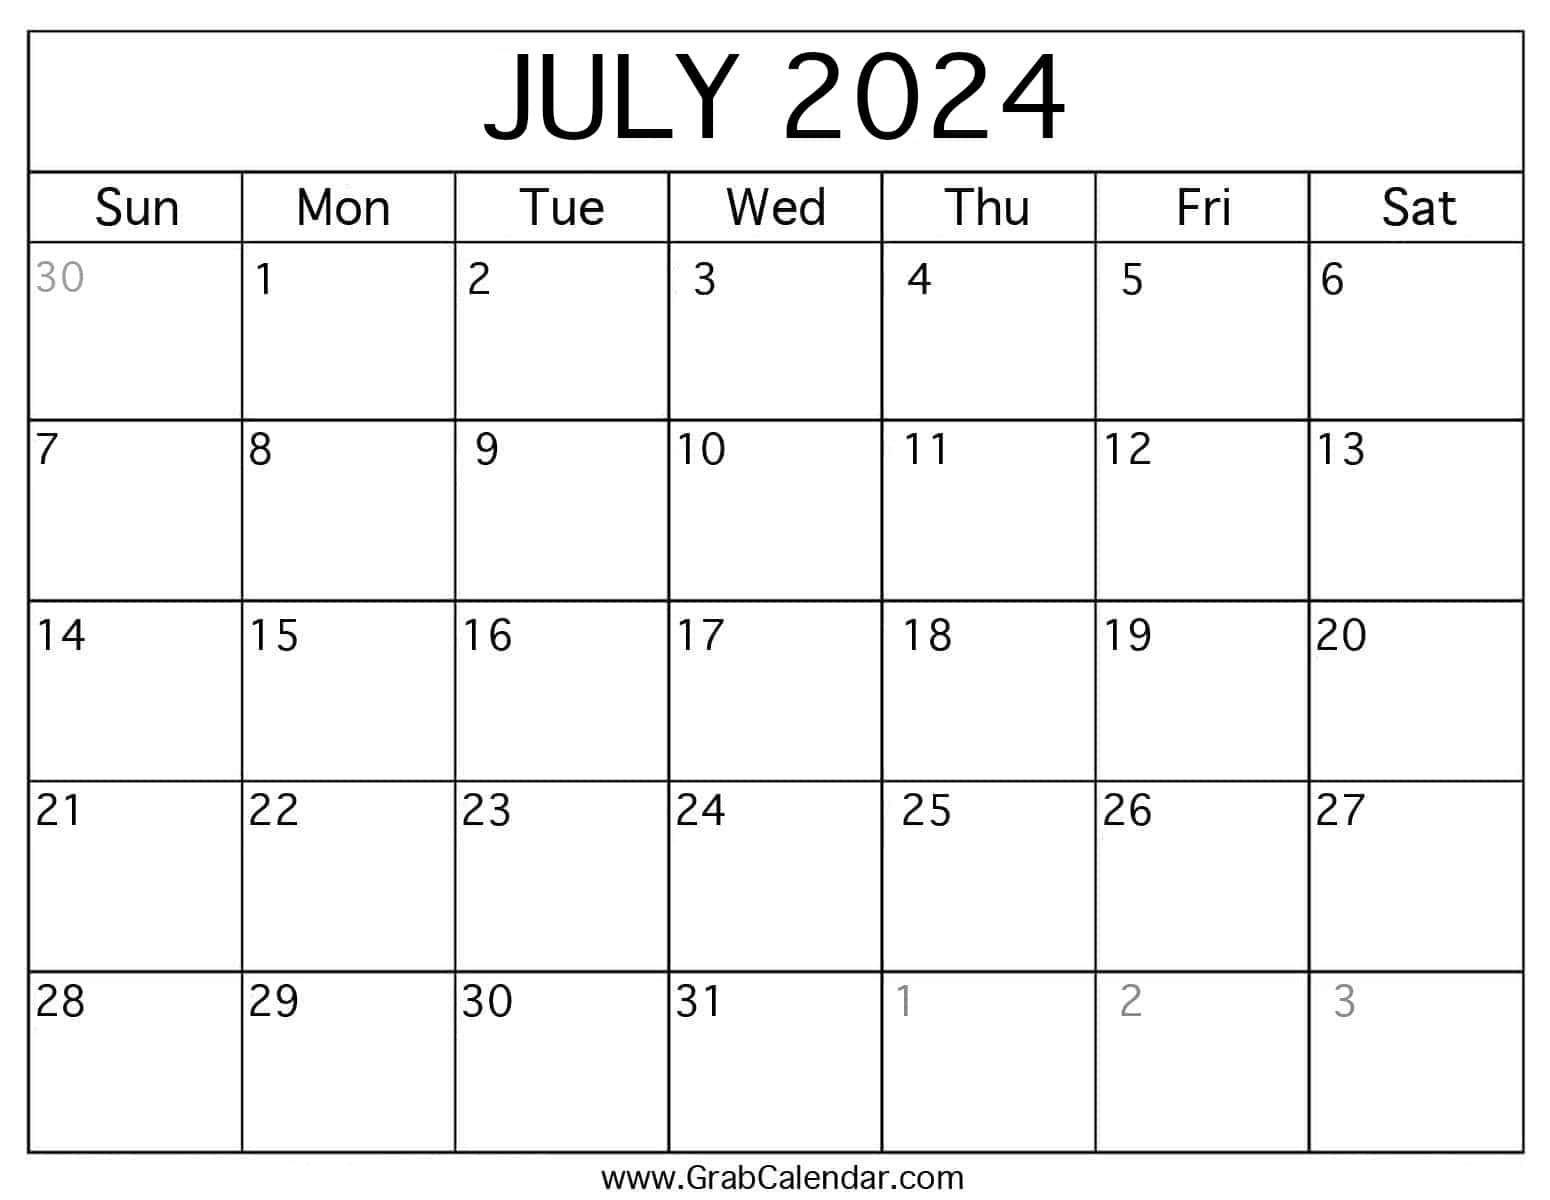 Printable July 2024 Calendar regarding Calendar Dates July 2024